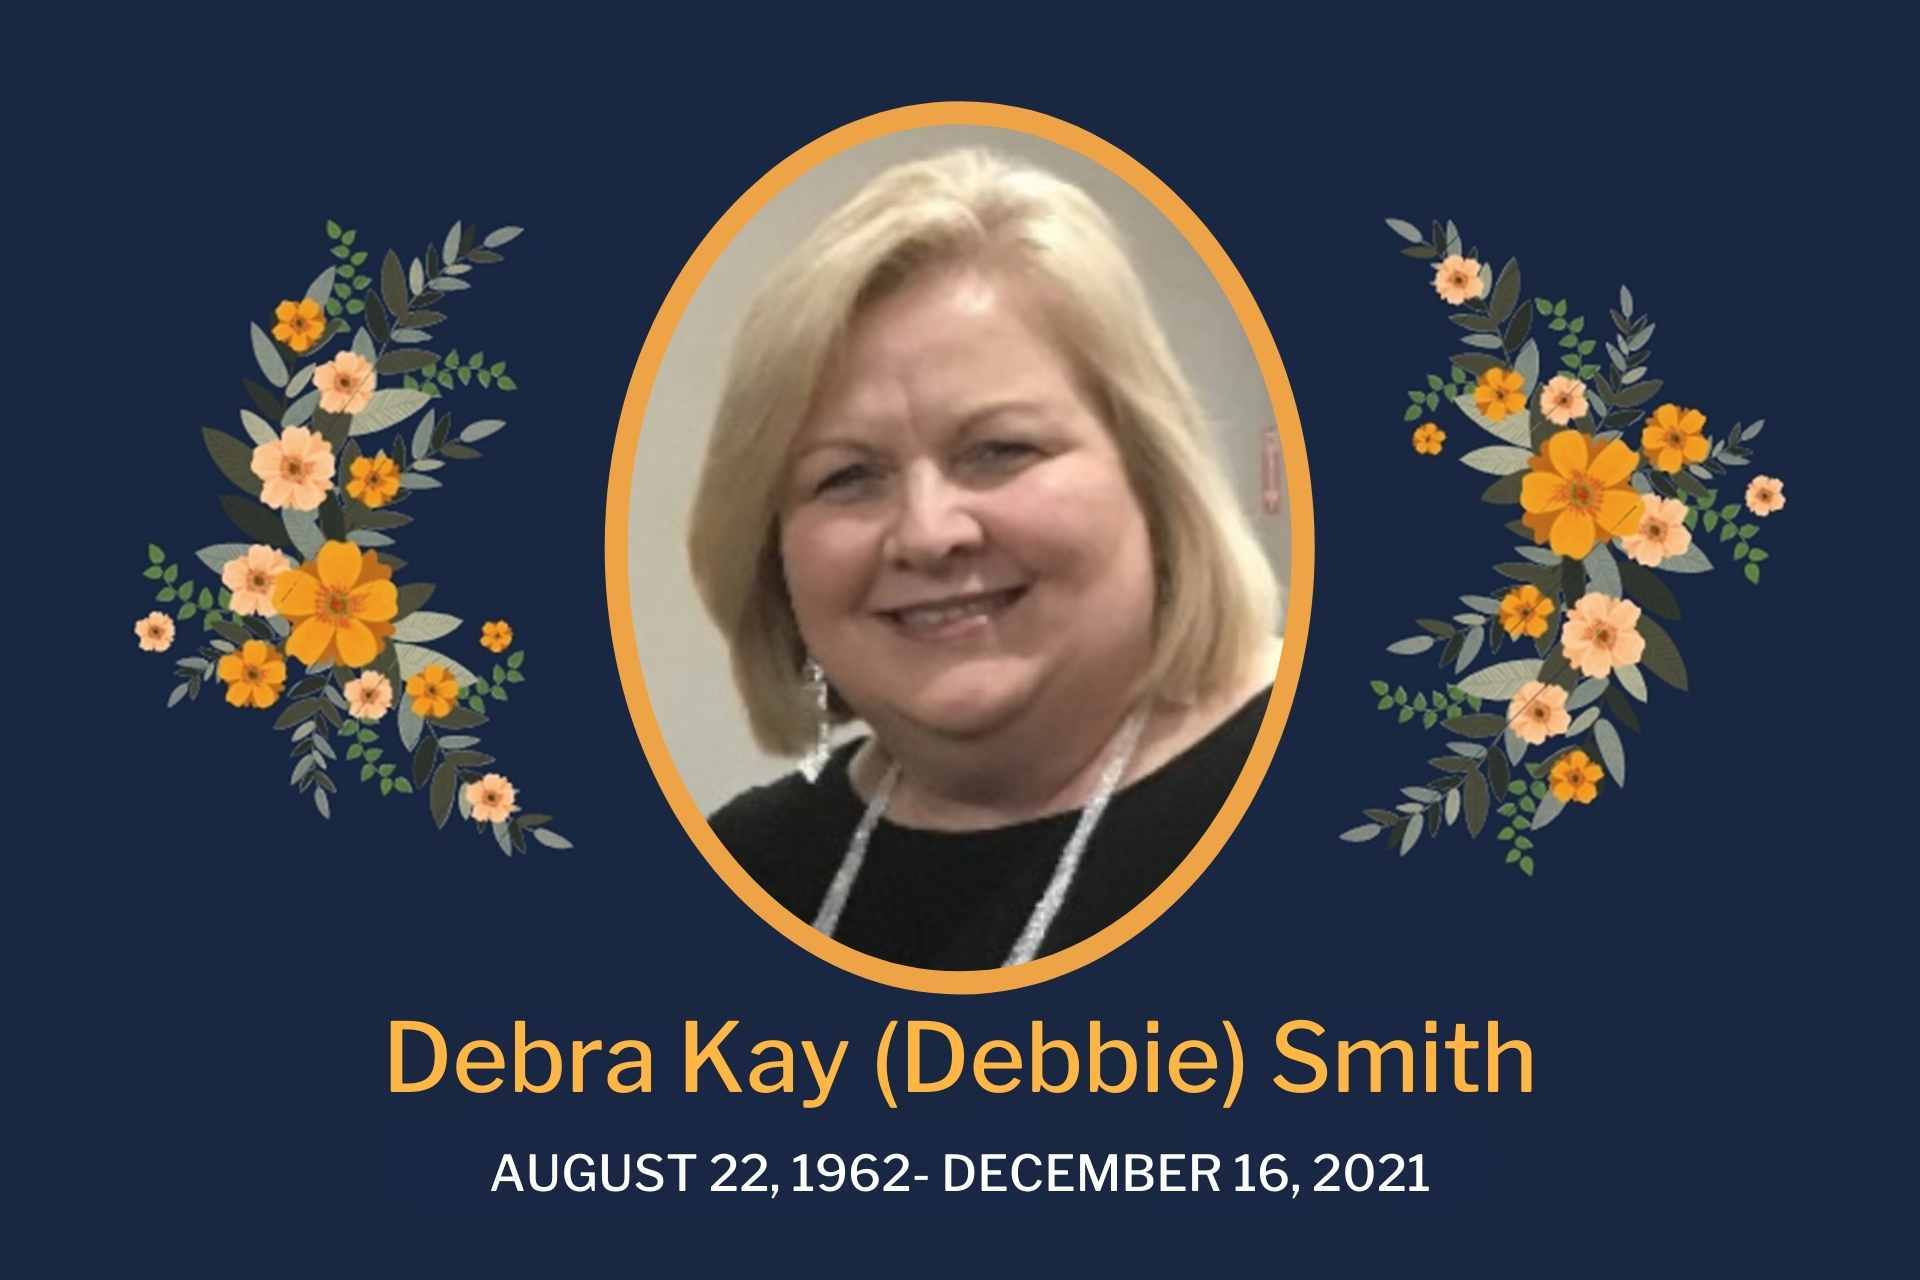 Obituary Debbie Smith